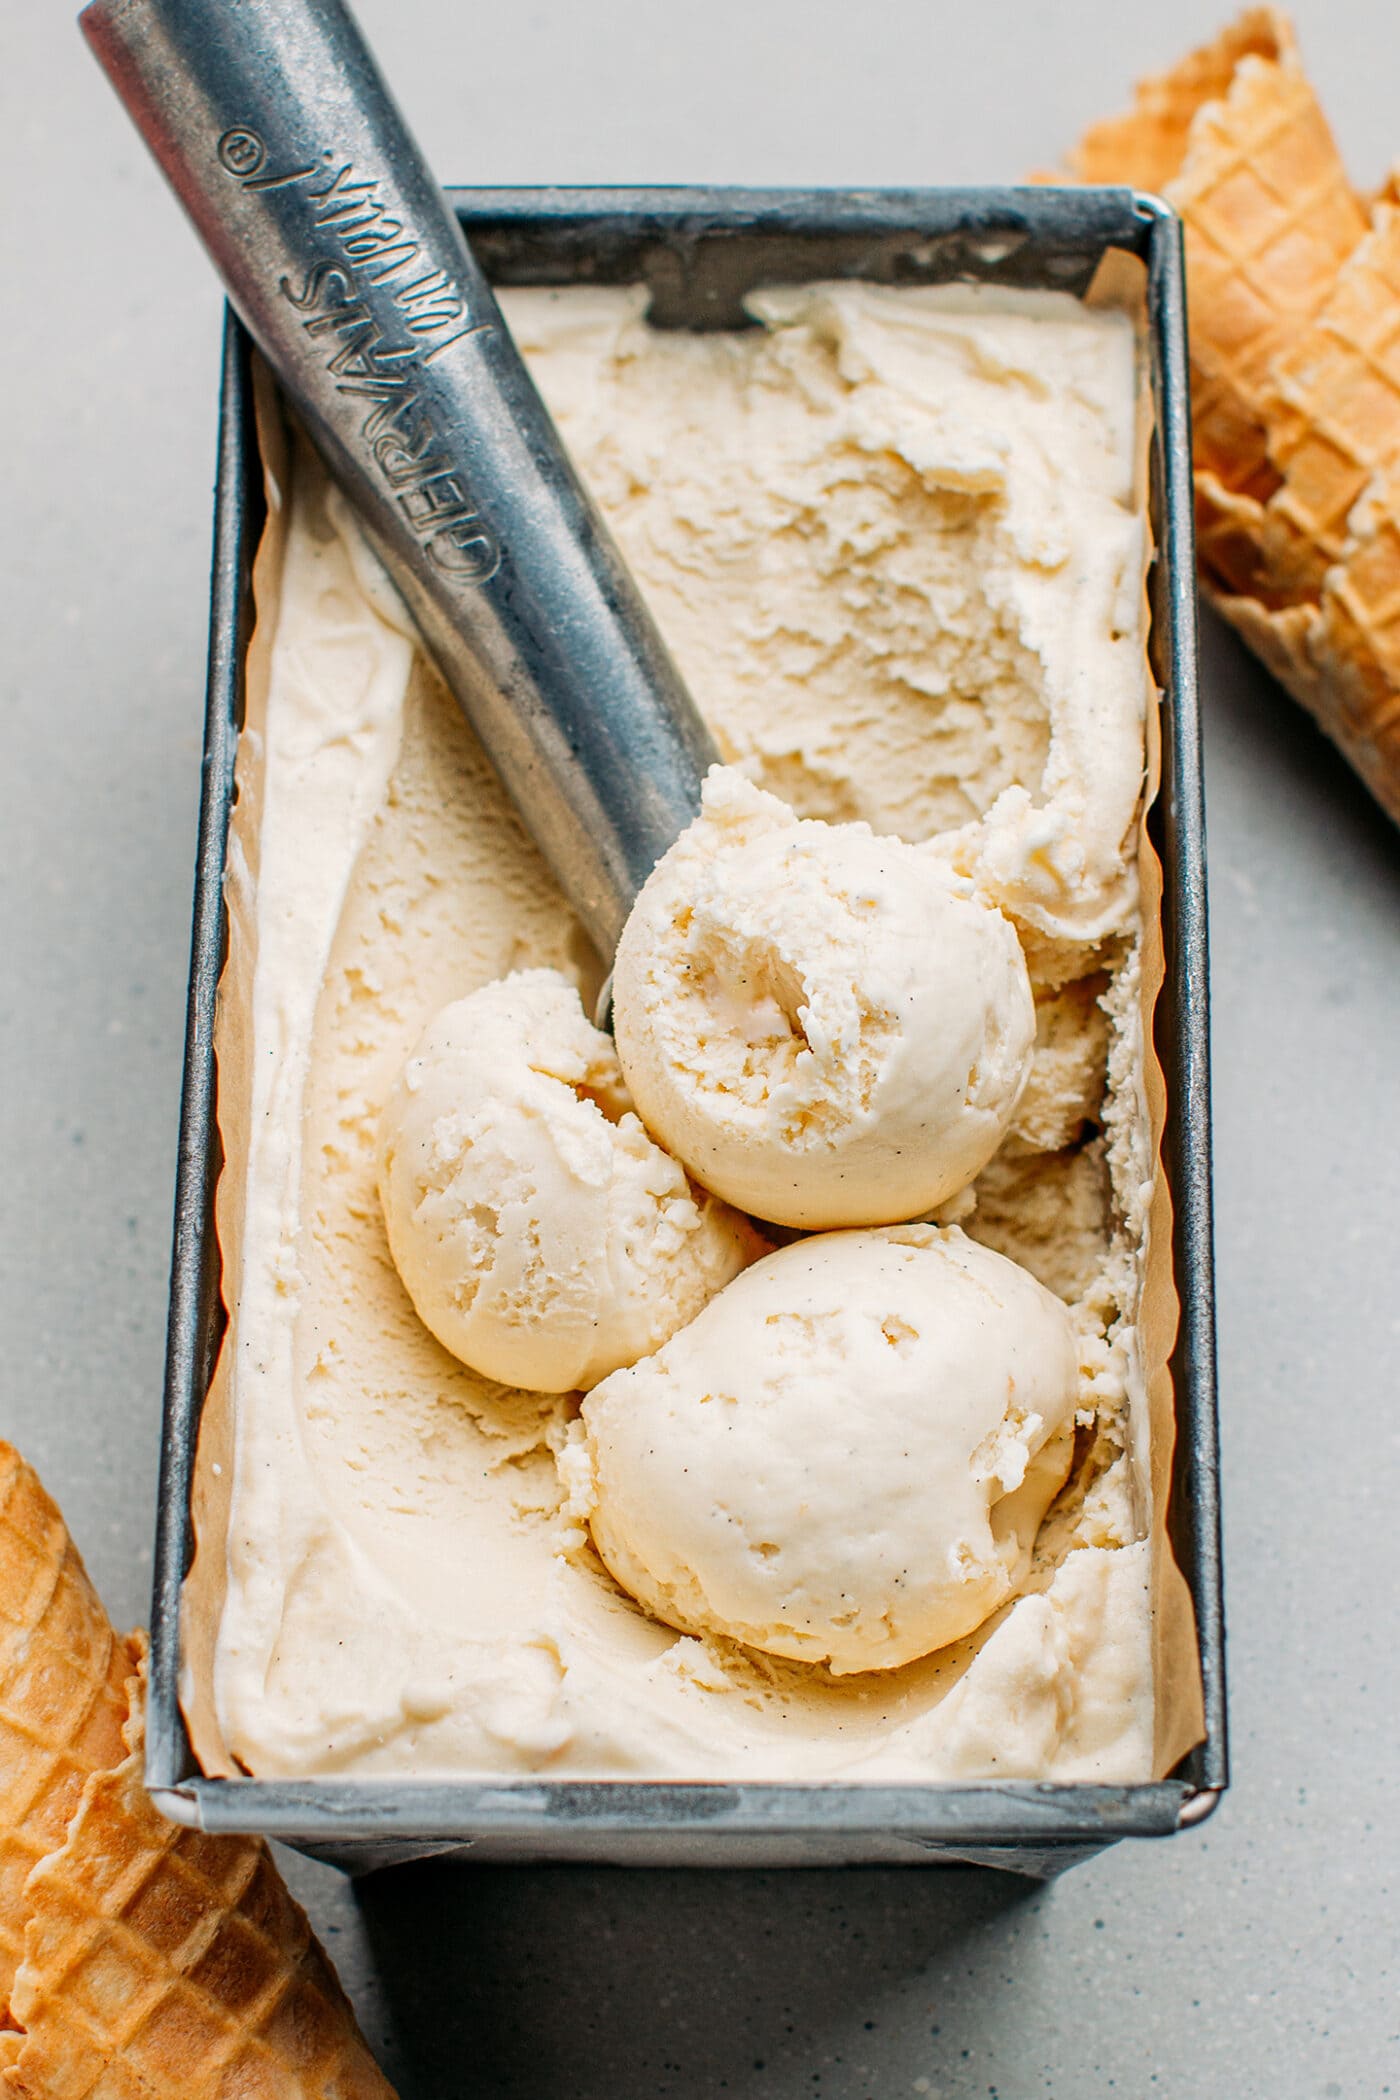 Vanilla ice cream scoops in a container.